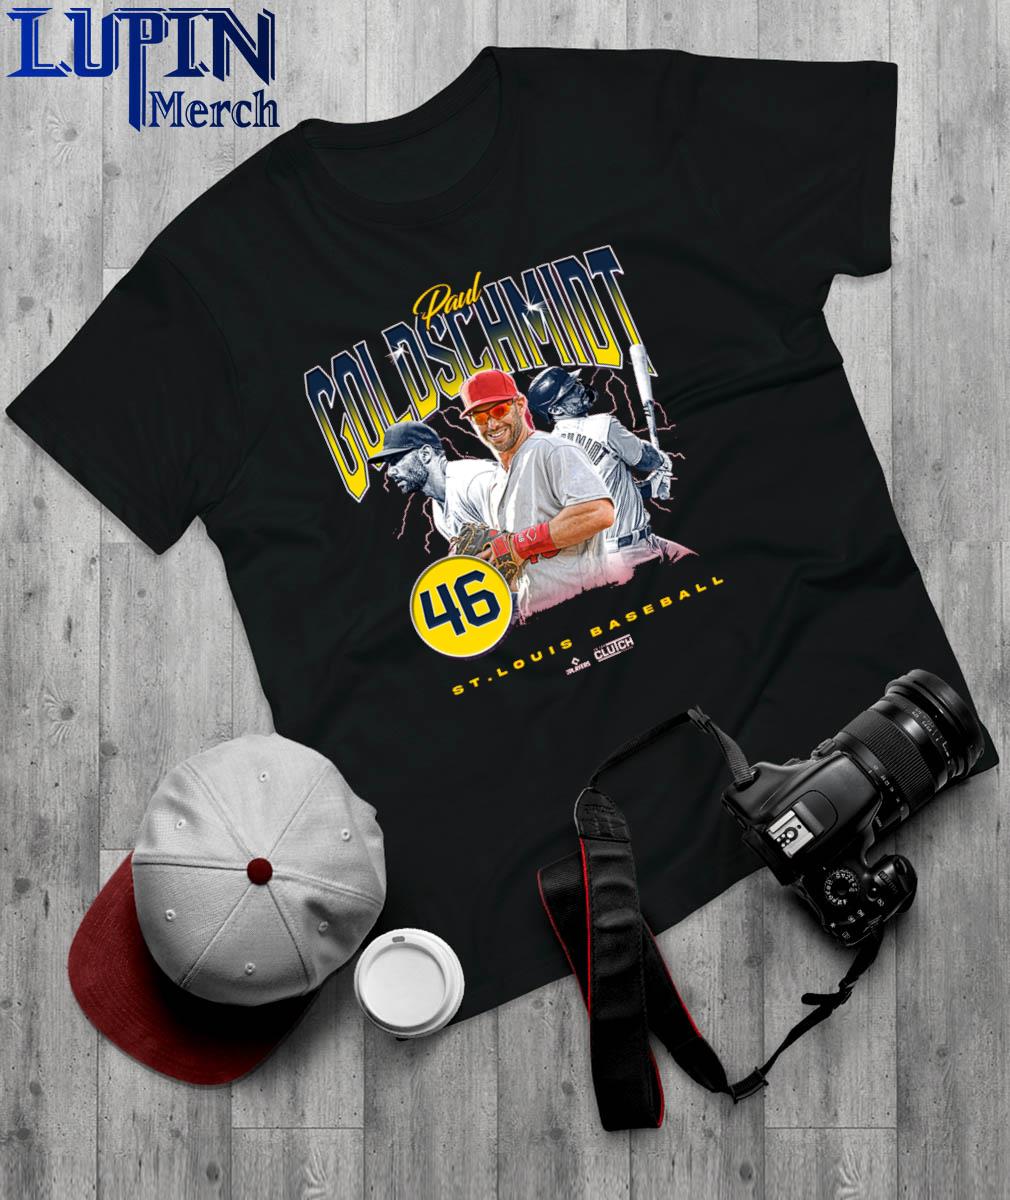 Official St louis baseball Paul goldschmidt retro 90s T-shirt